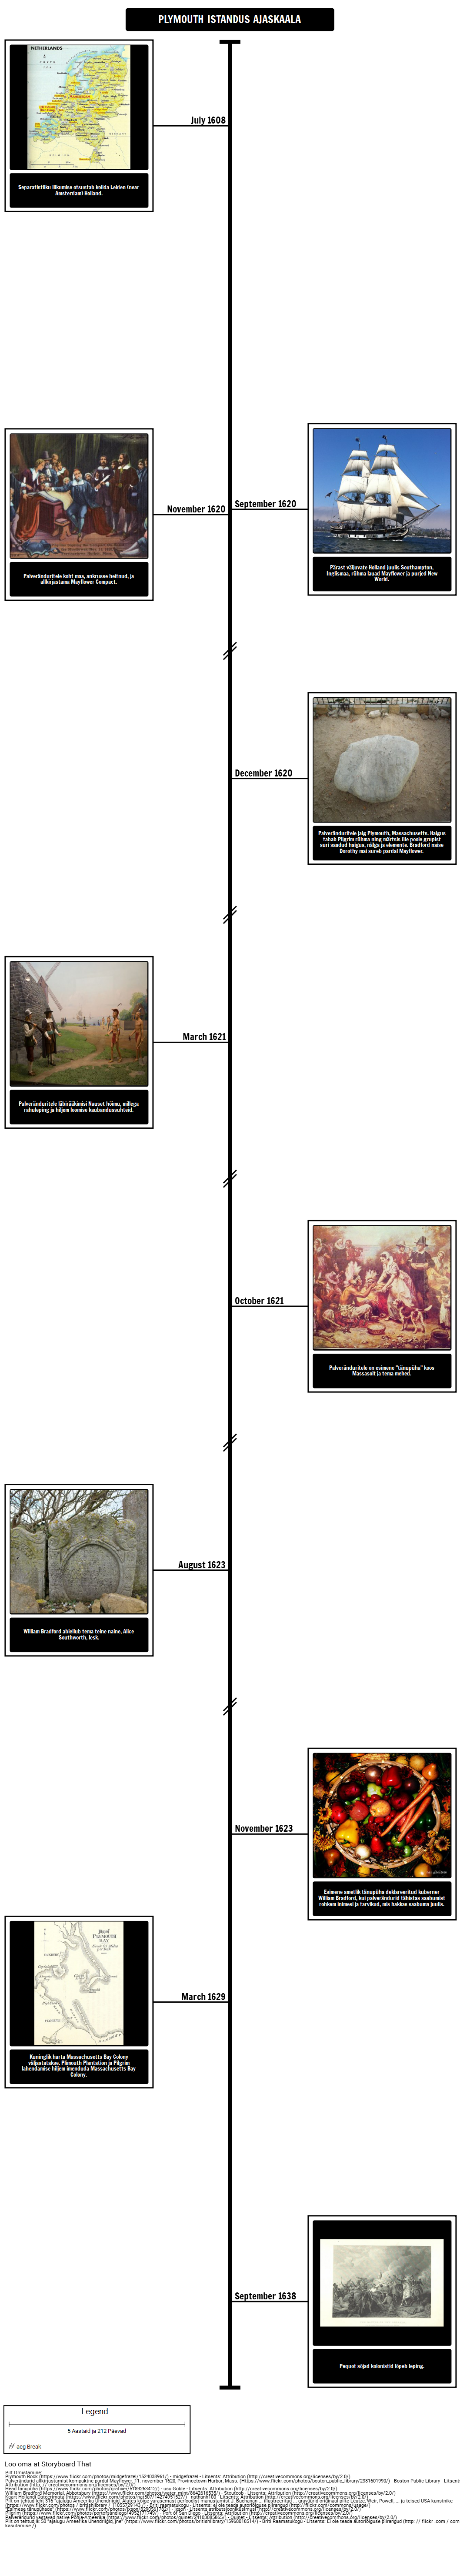 Plymouth Plantation Timeline